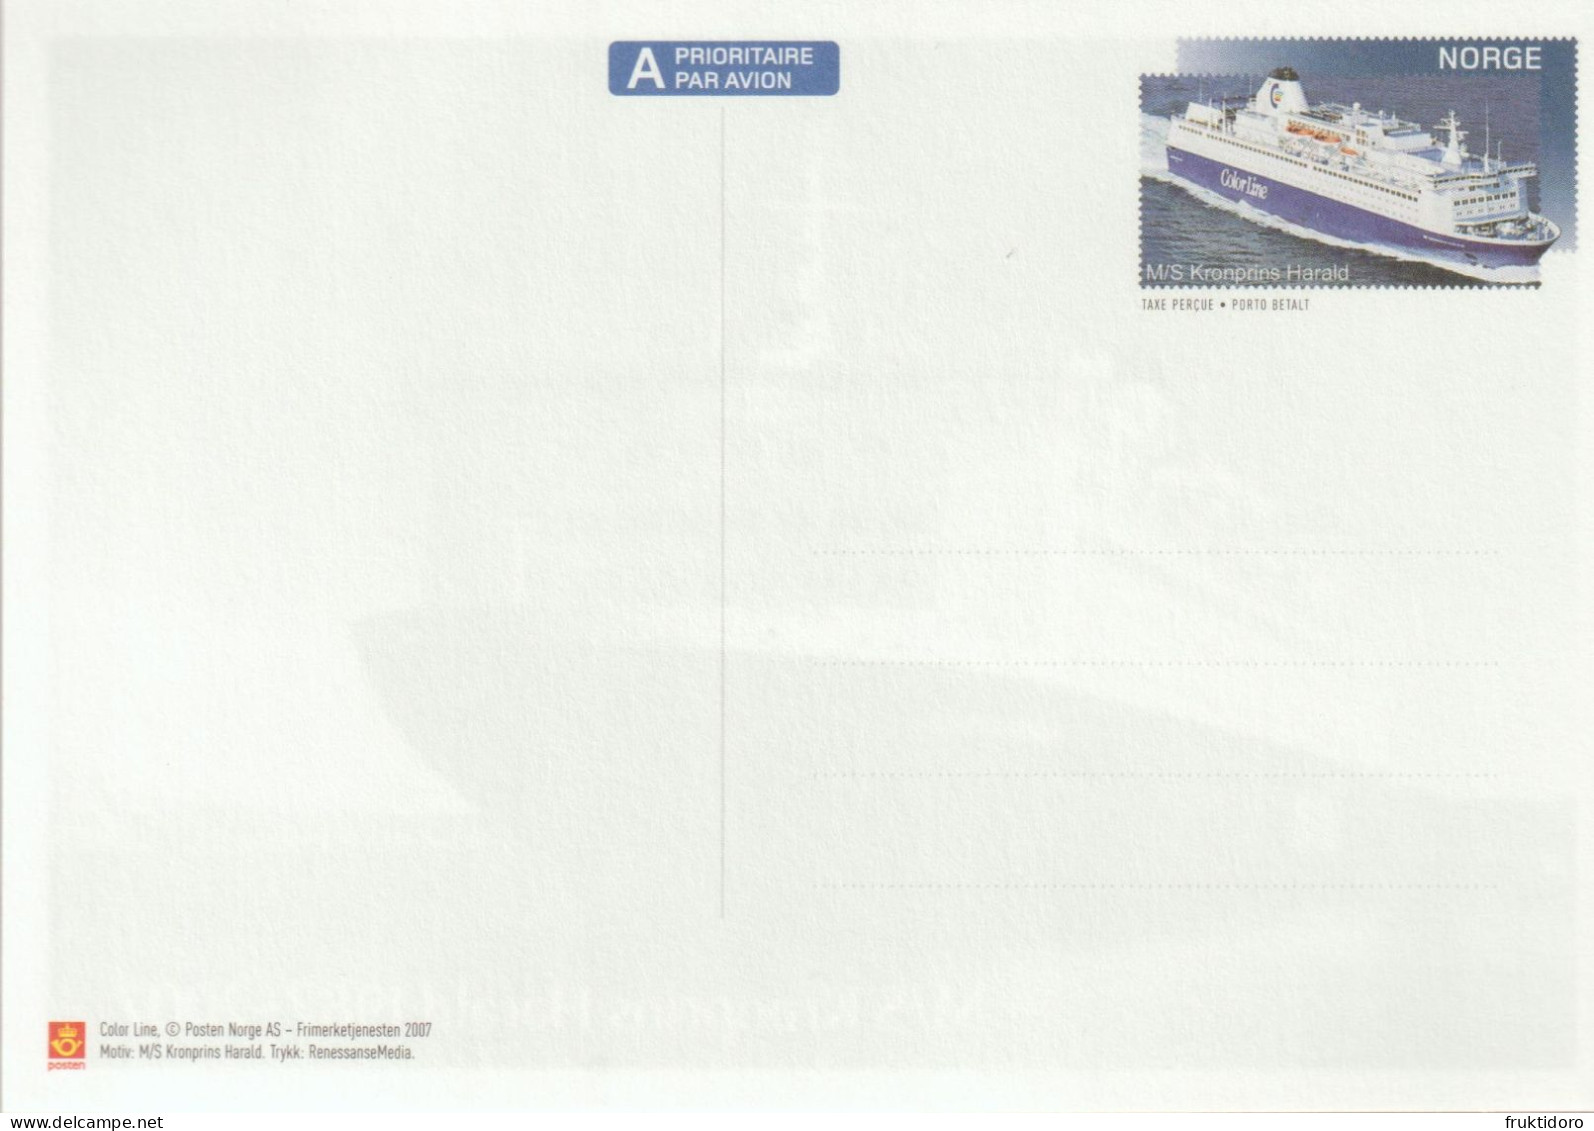 Norway Postal Stationery 2007 Ship M/S Crown Prince Haral 1987-2007 ** - Interi Postali